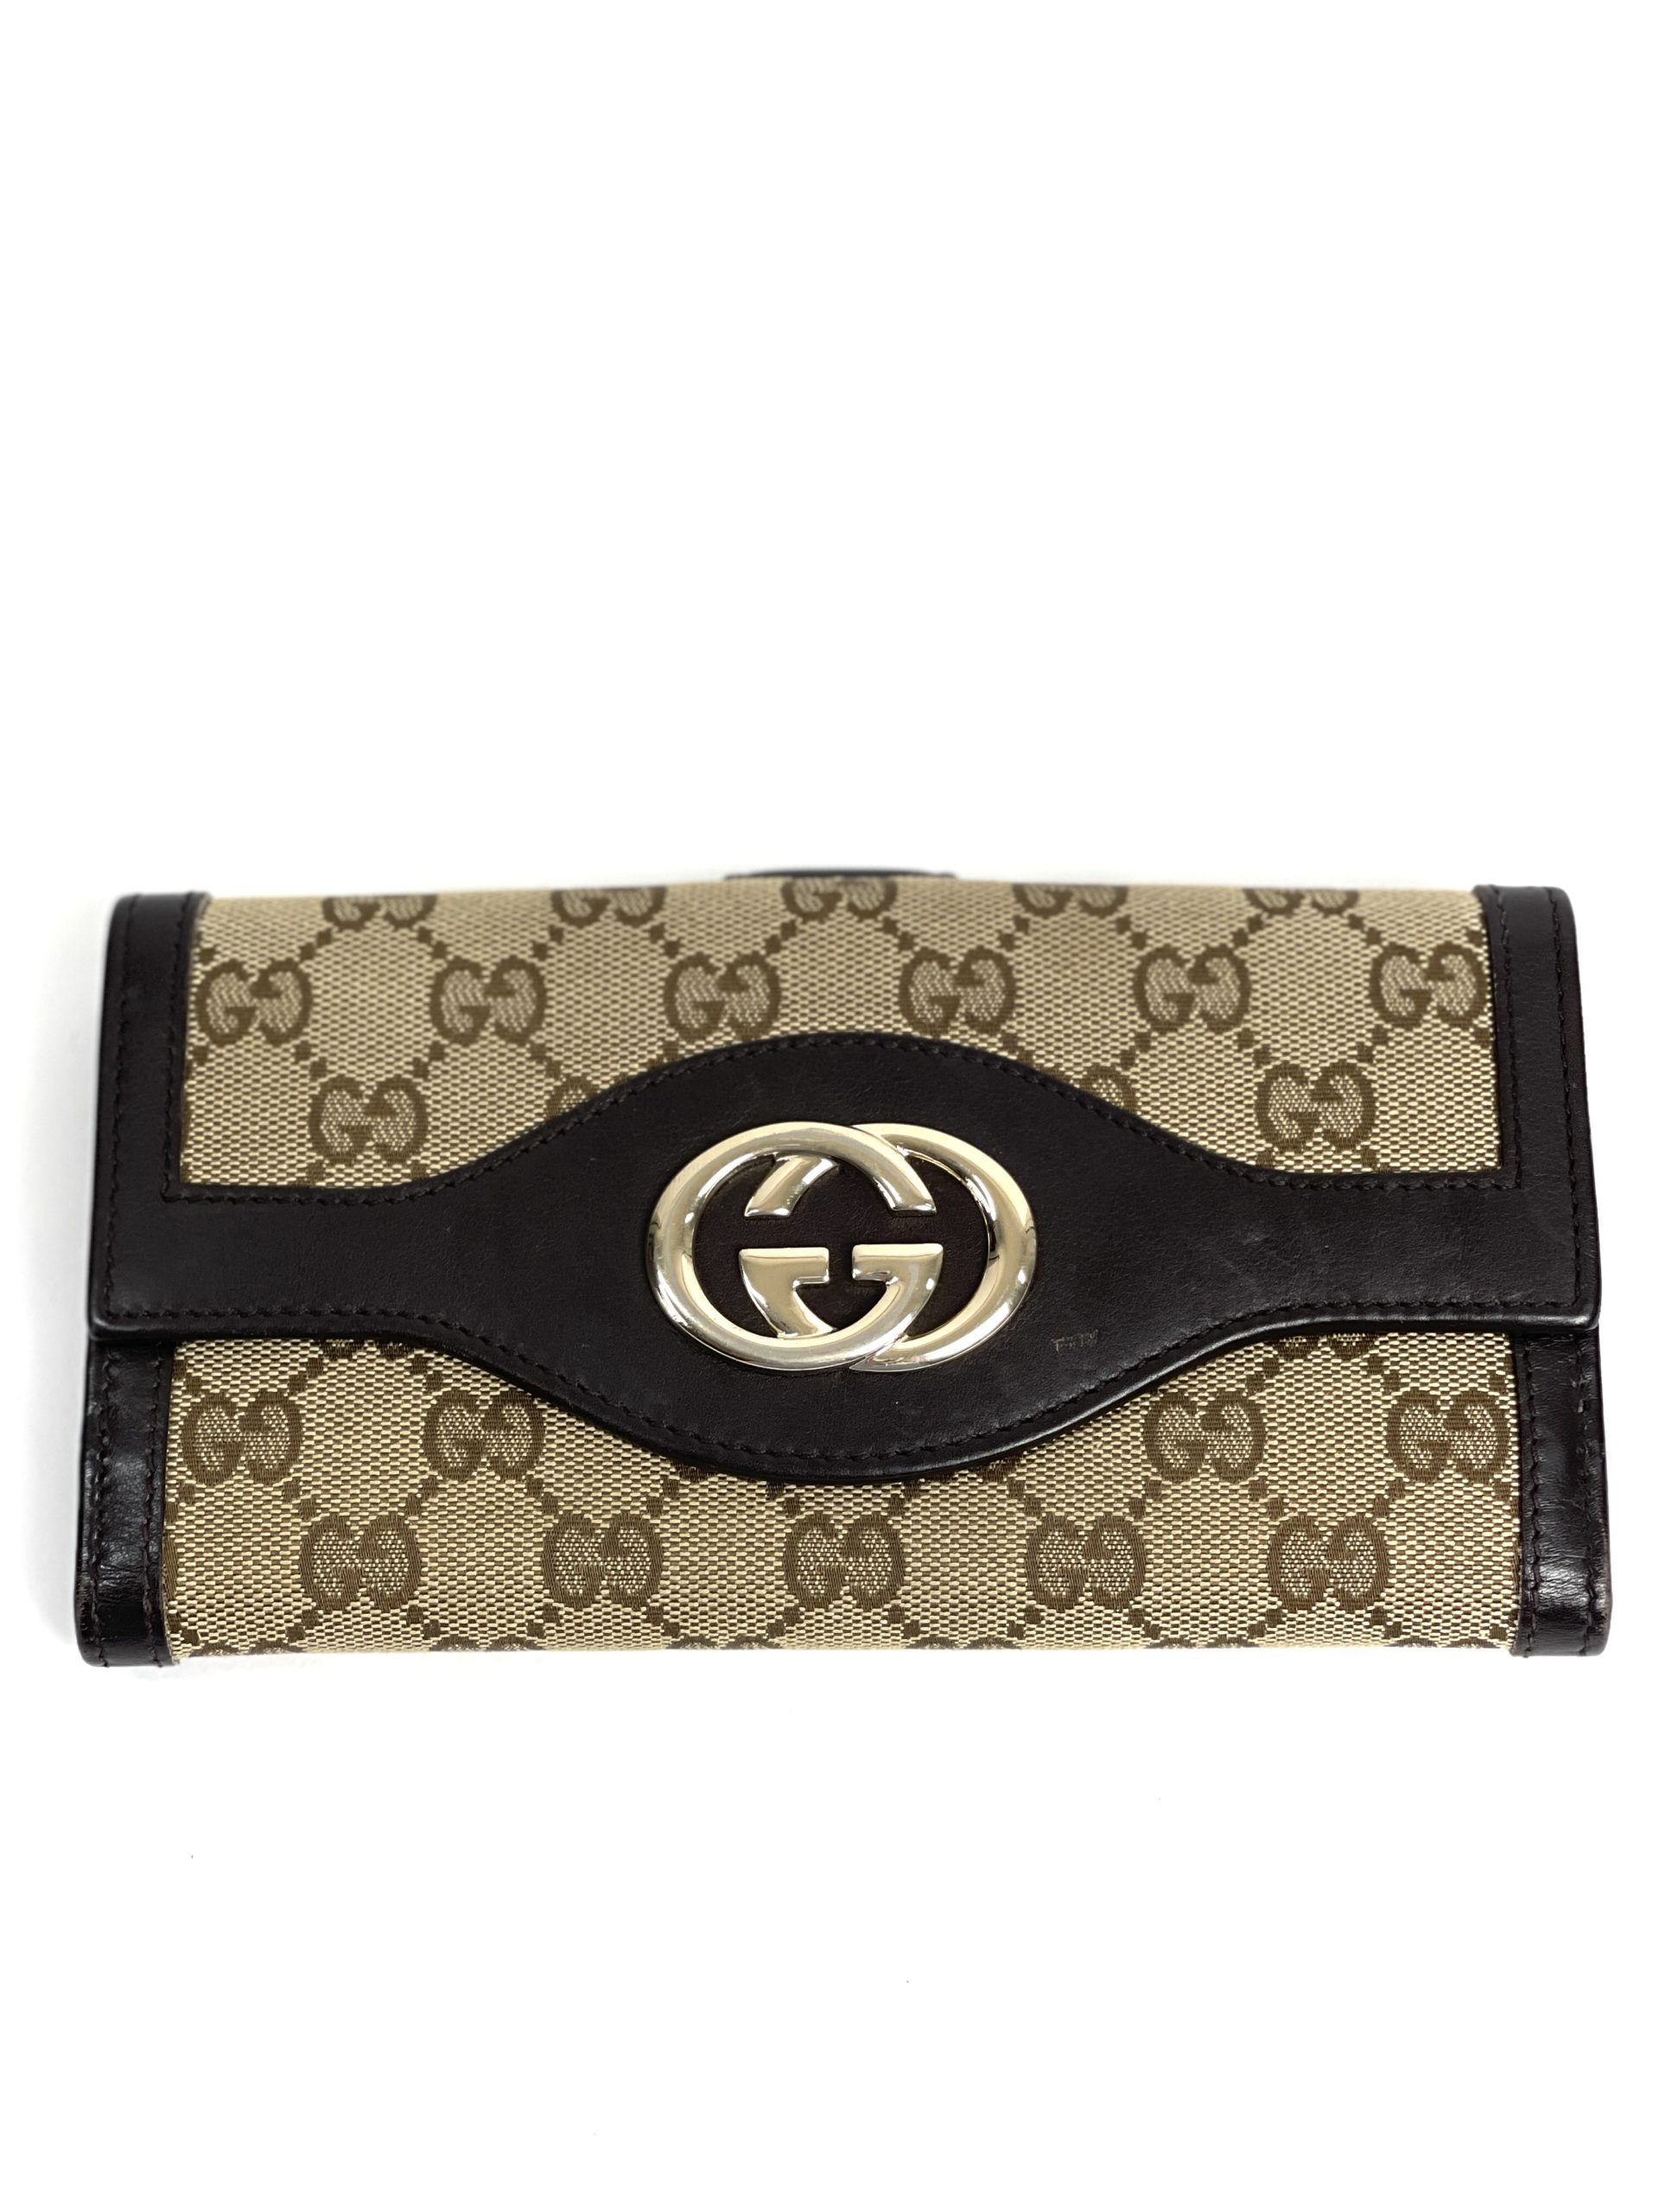 Gucci, Bags, Authentic Gucci Mens Wallet